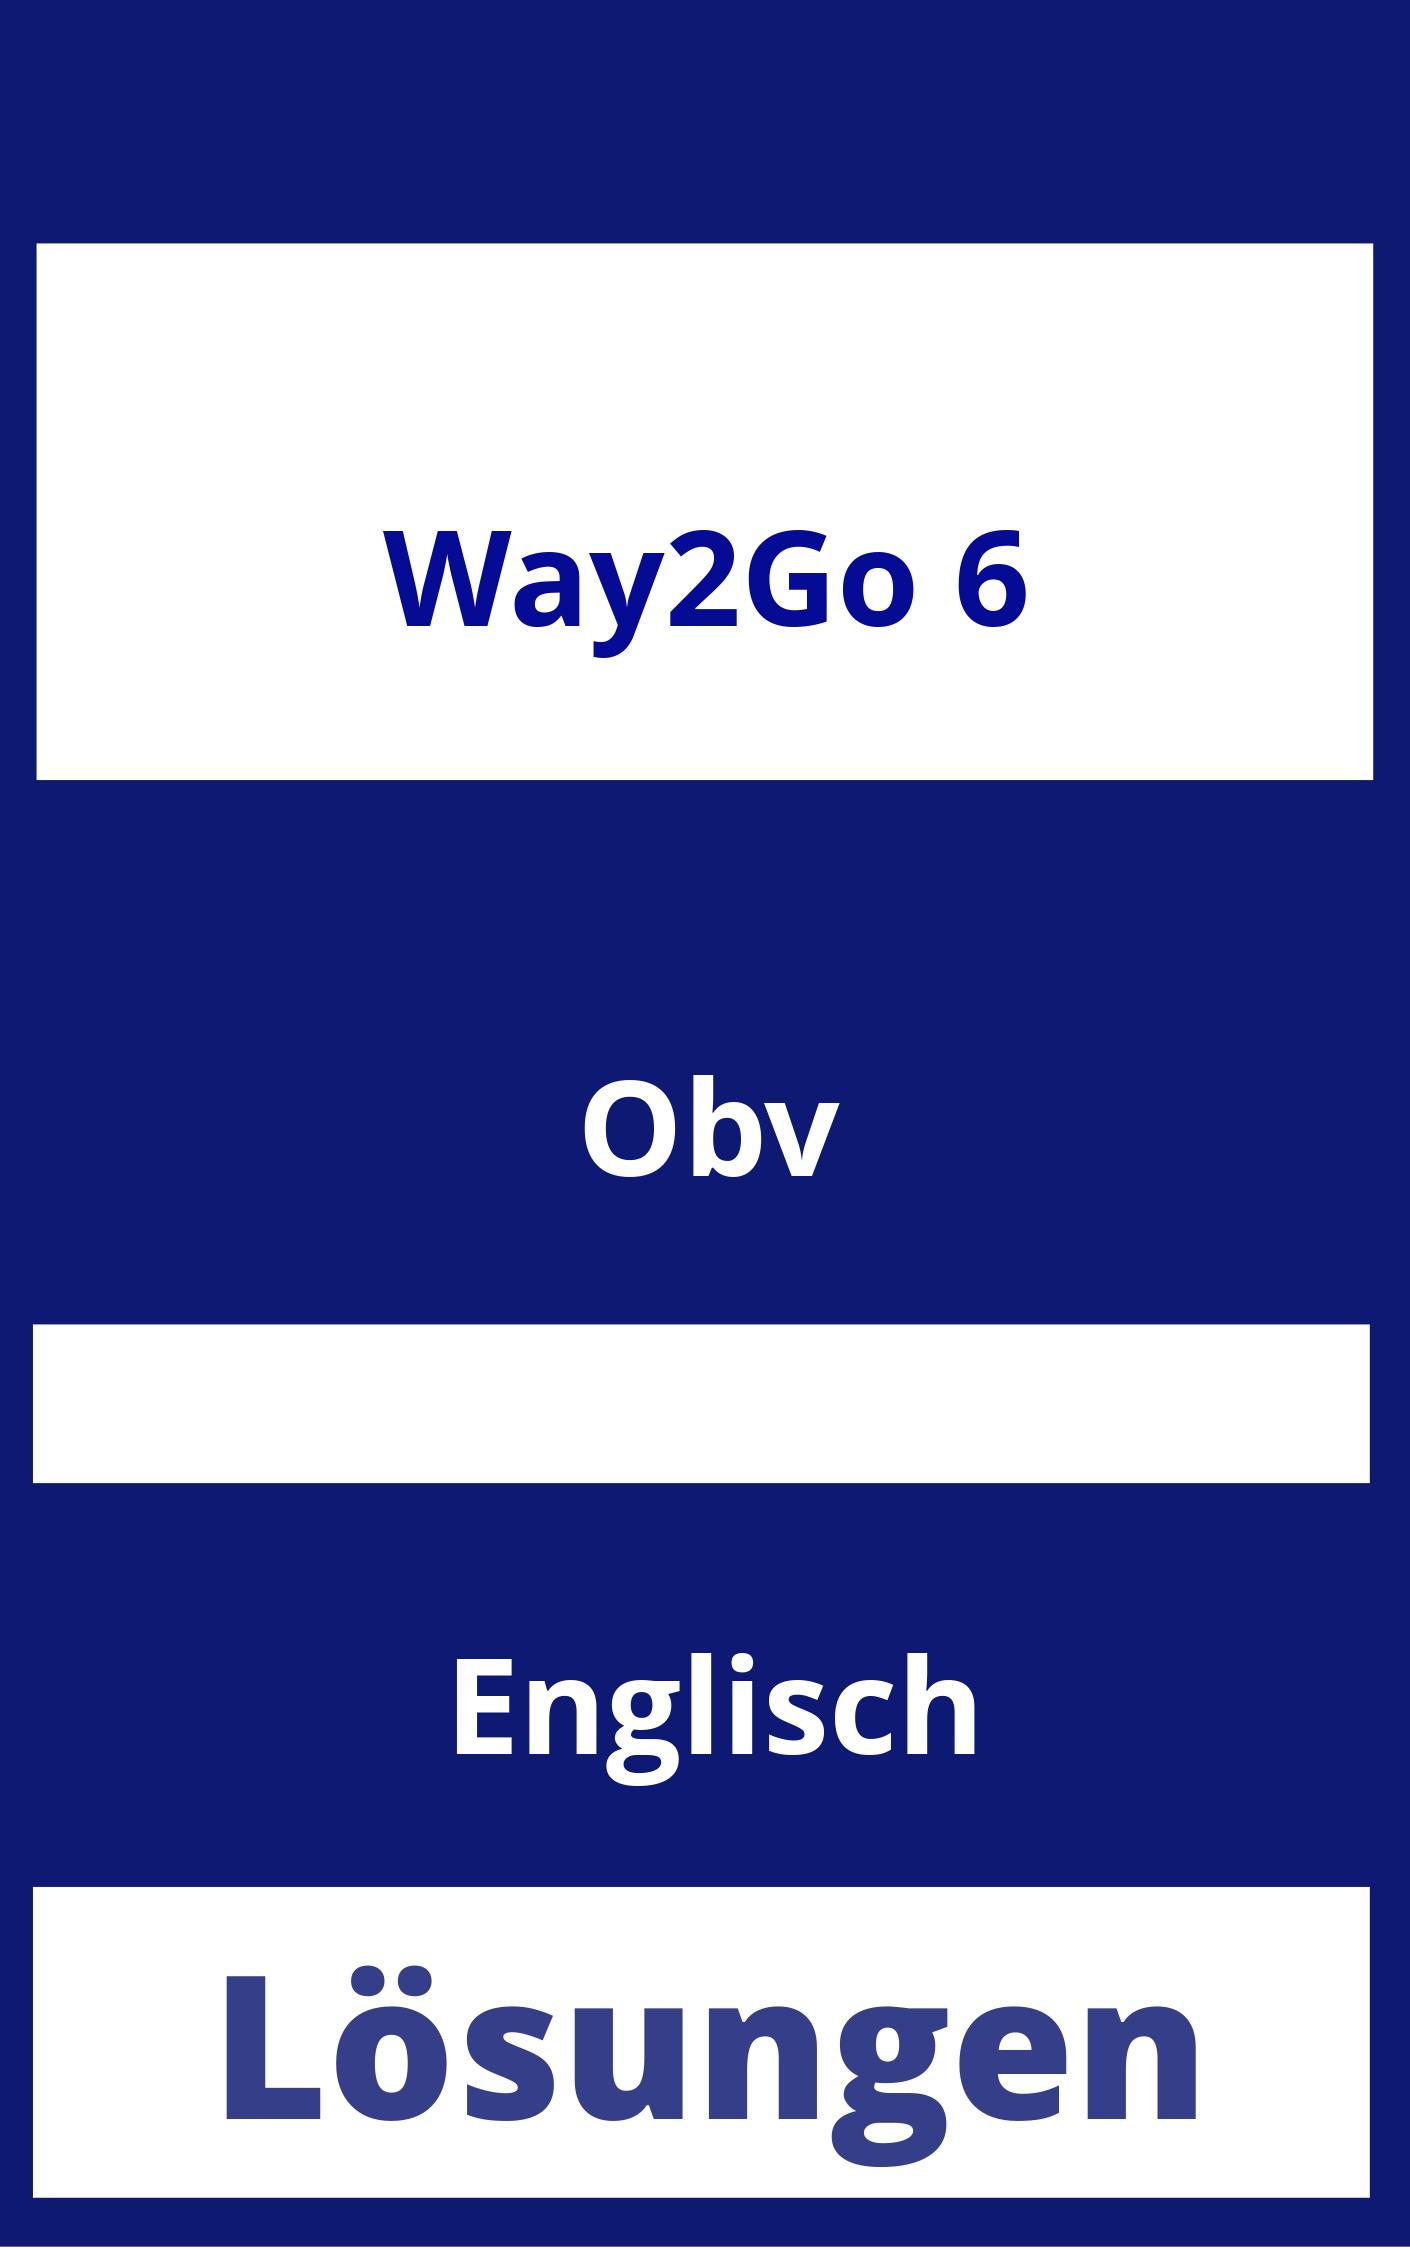 Way2go 6